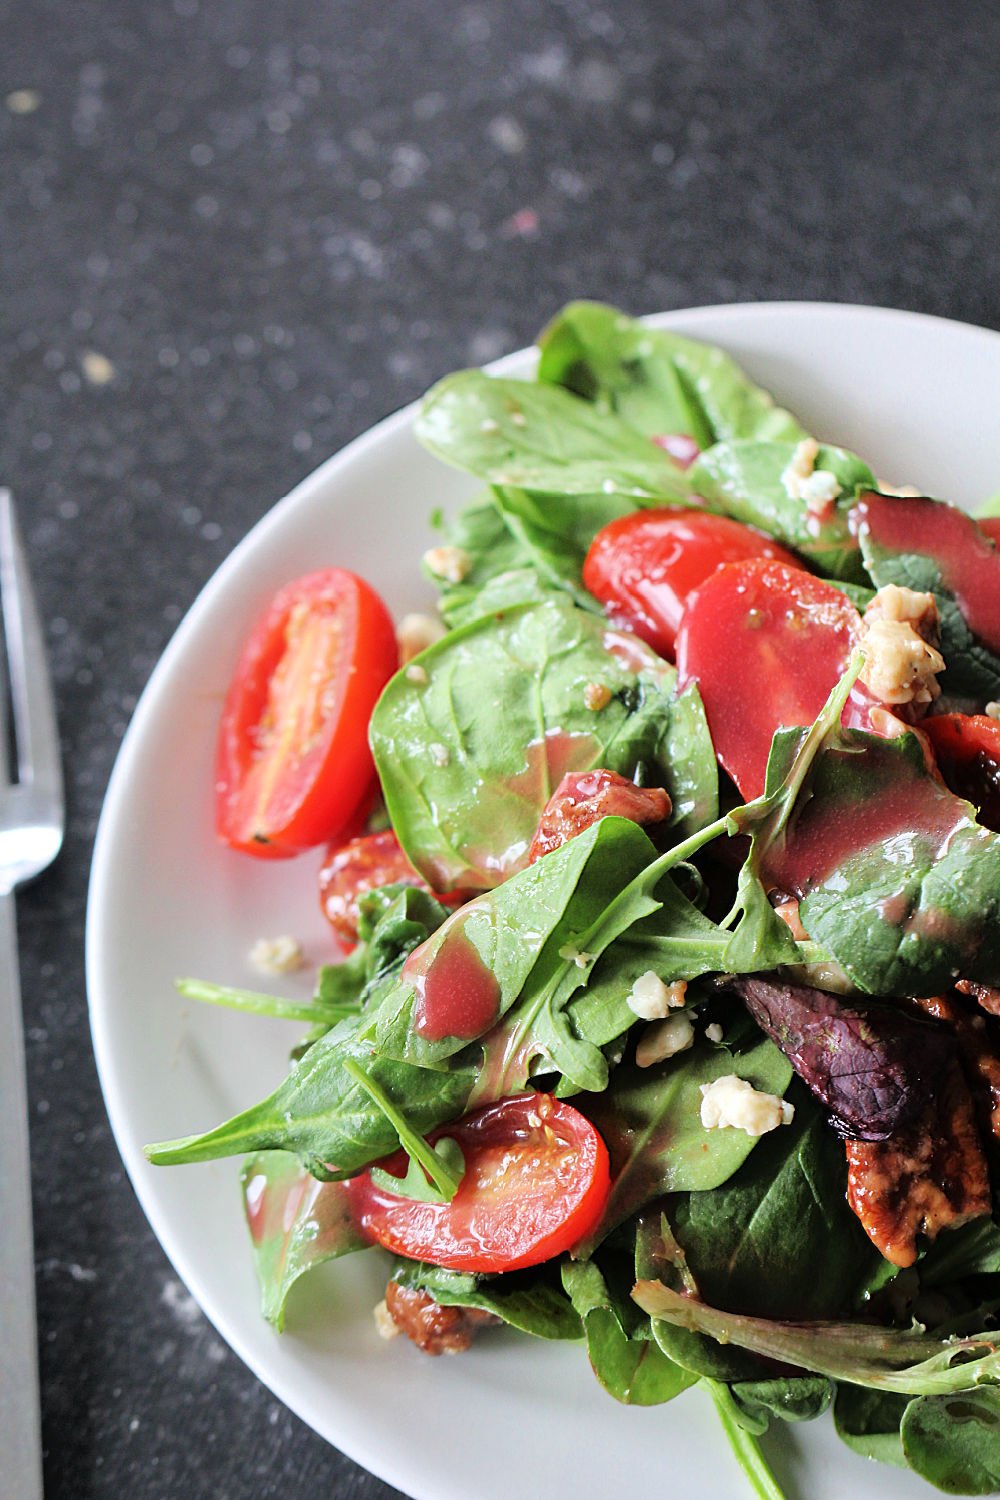 California Salad with Raspberry Vinaigrette Dressing Recipe